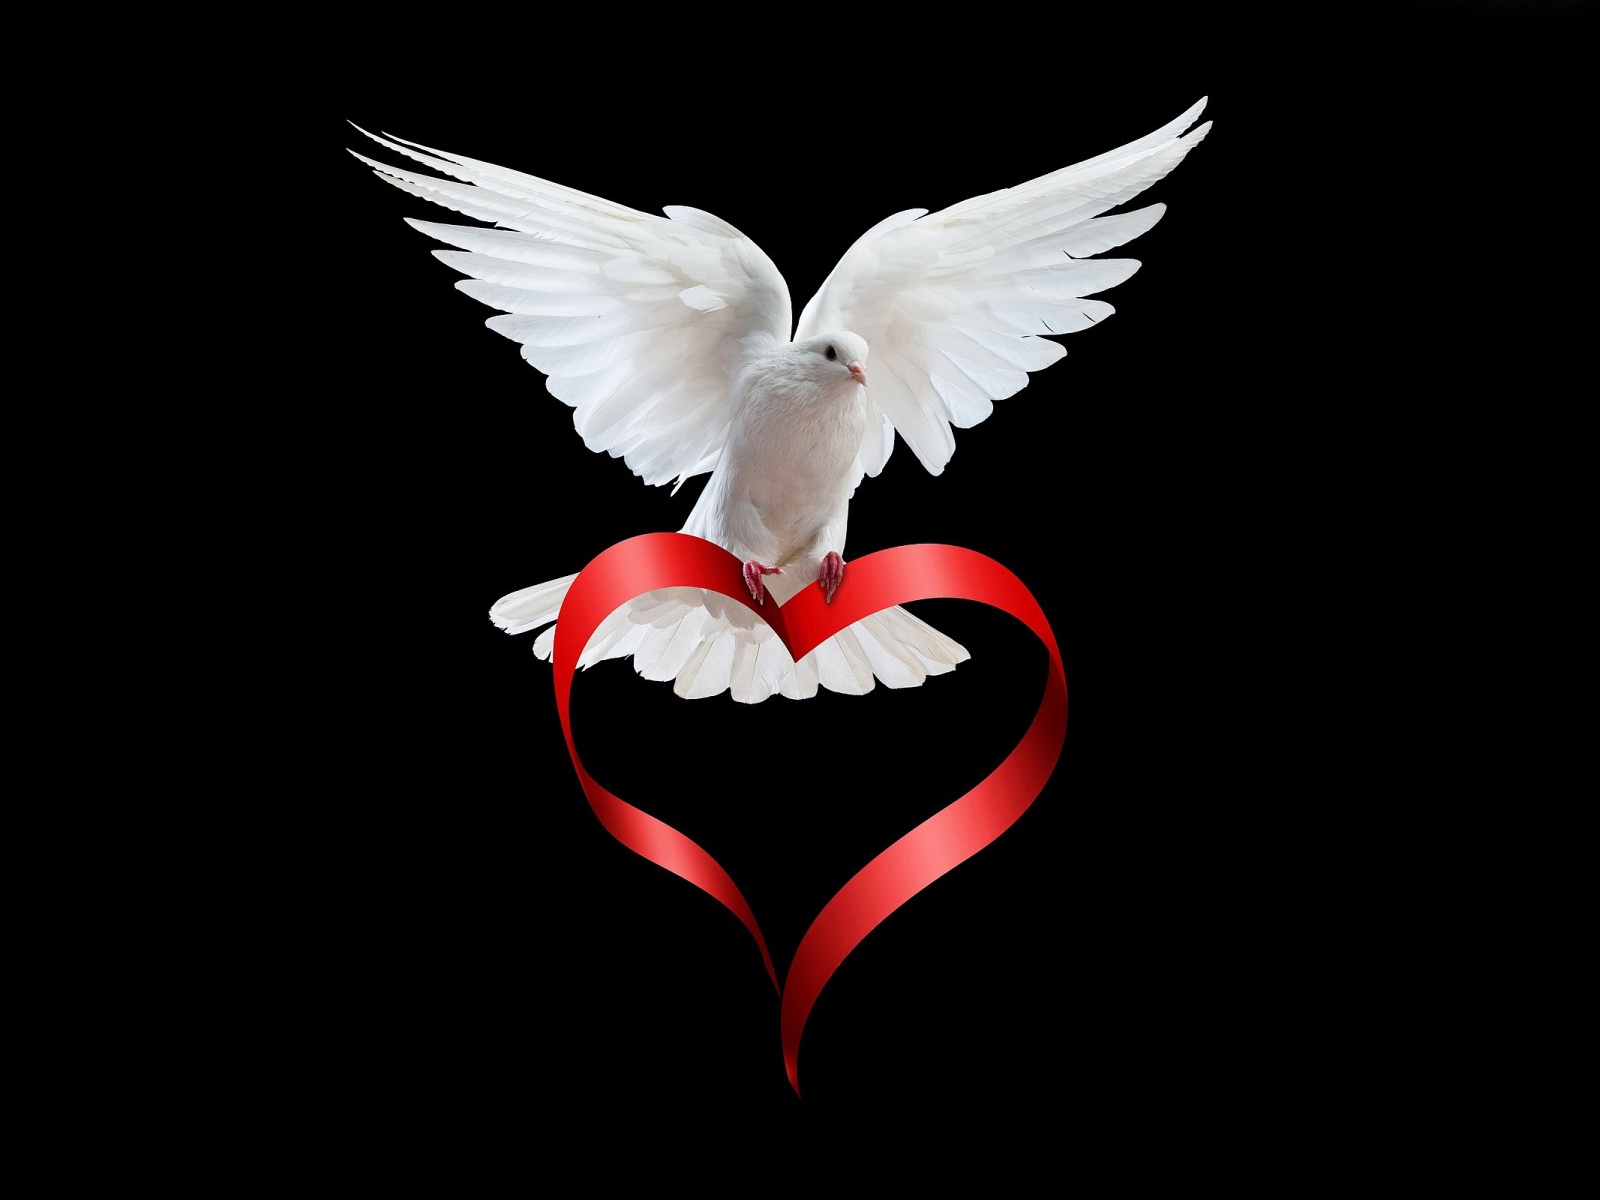 Doves Wallpaper - Dove Of Love - HD Wallpaper 